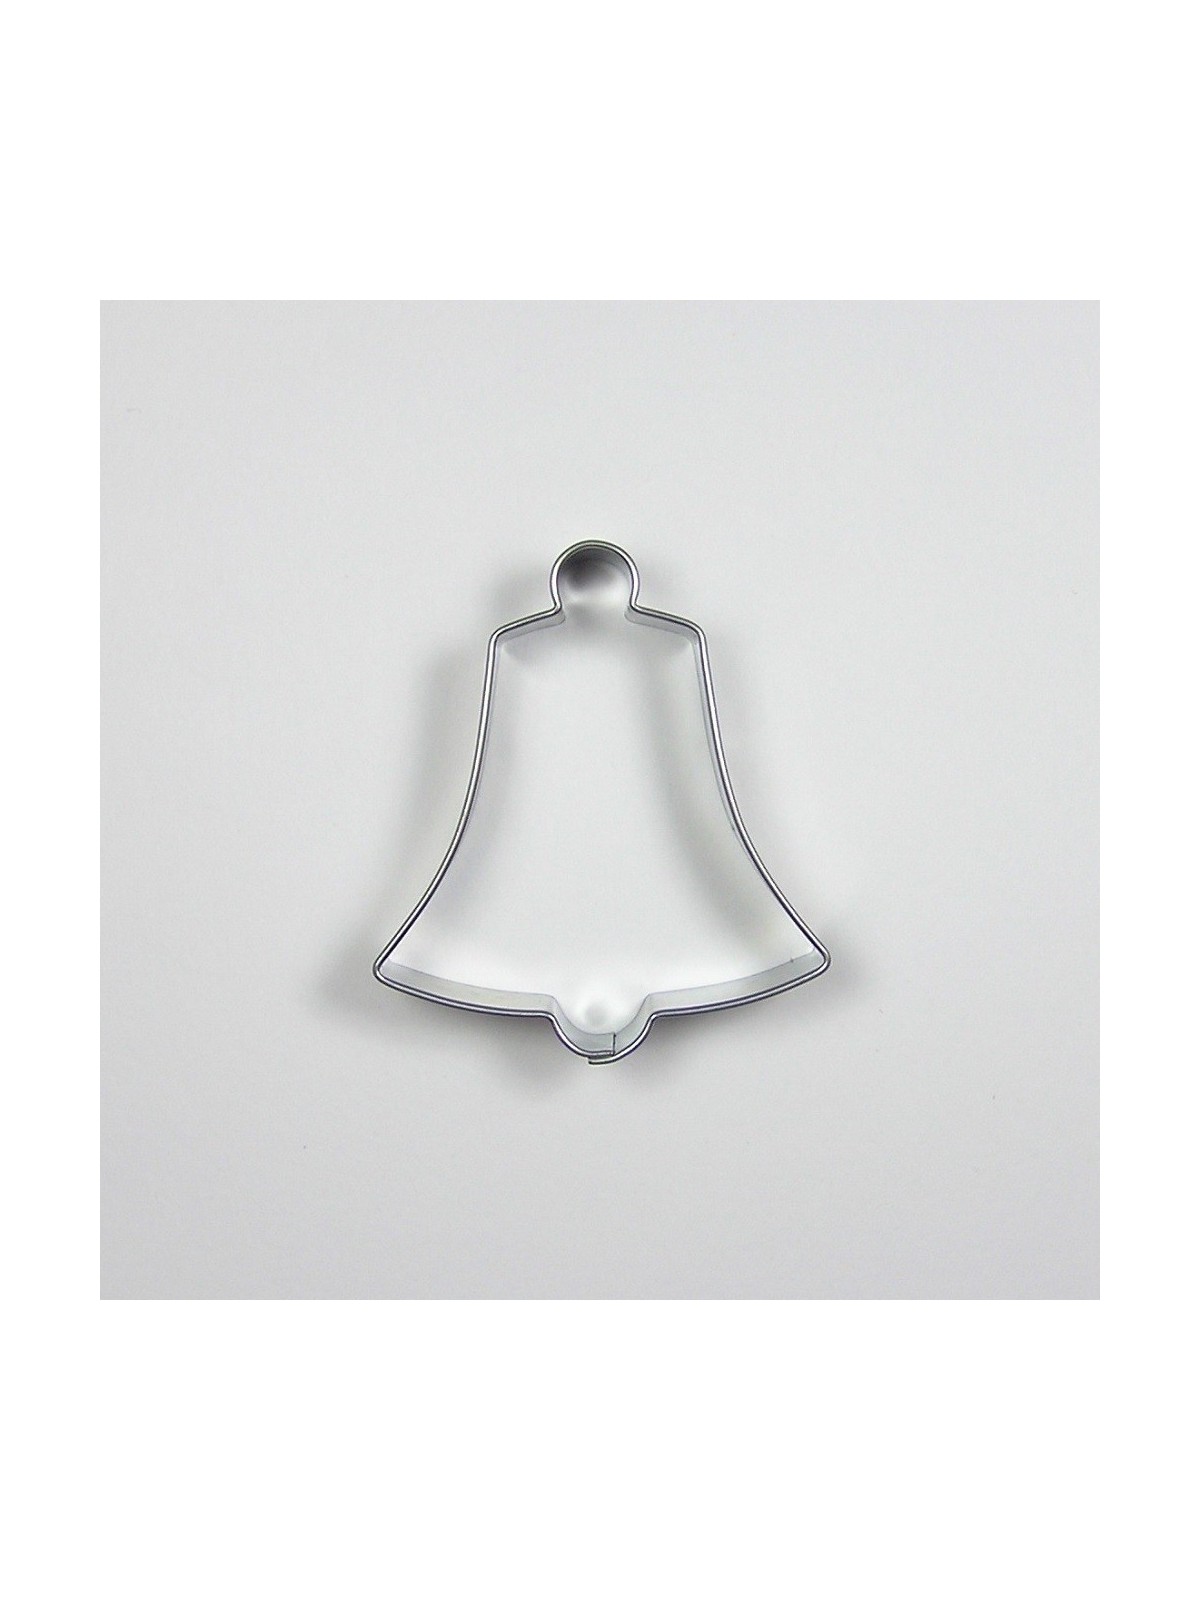 Stainless steel cutter - bell